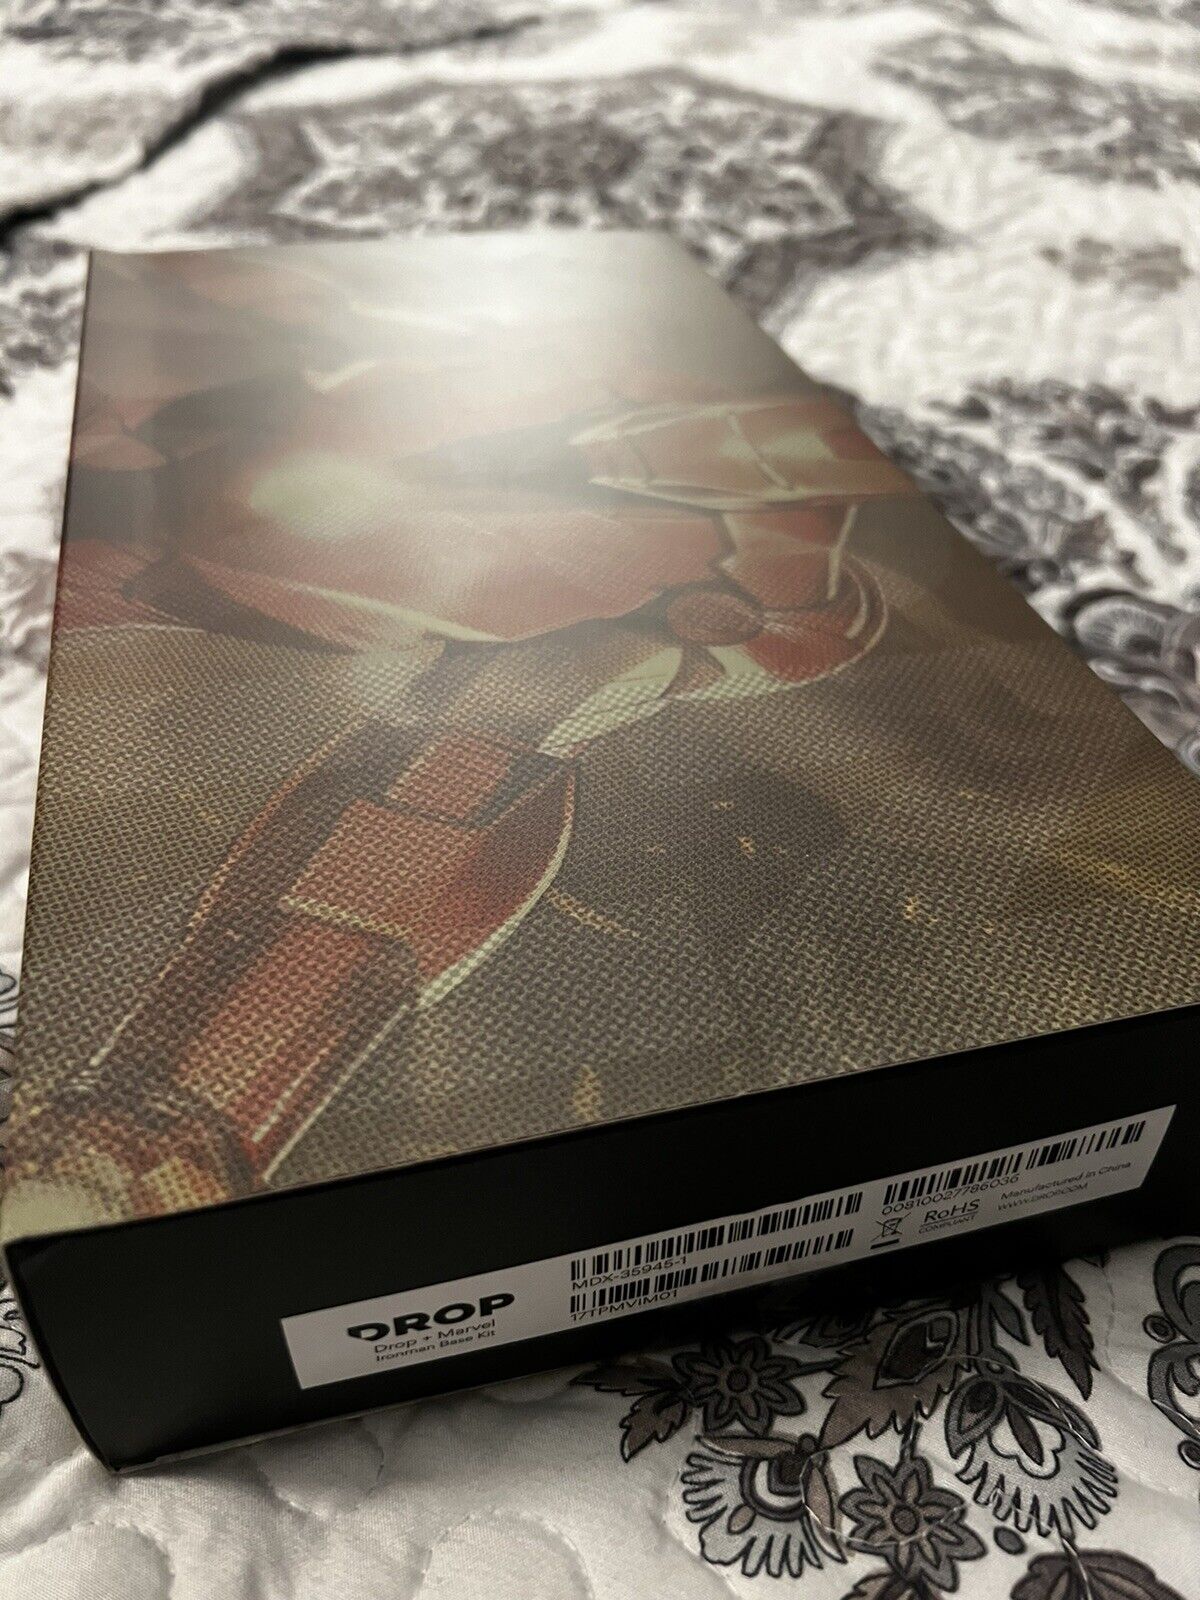 DROP + Marvel Avengers Iron Man Keycap Set - MT3 Profile Base Kit